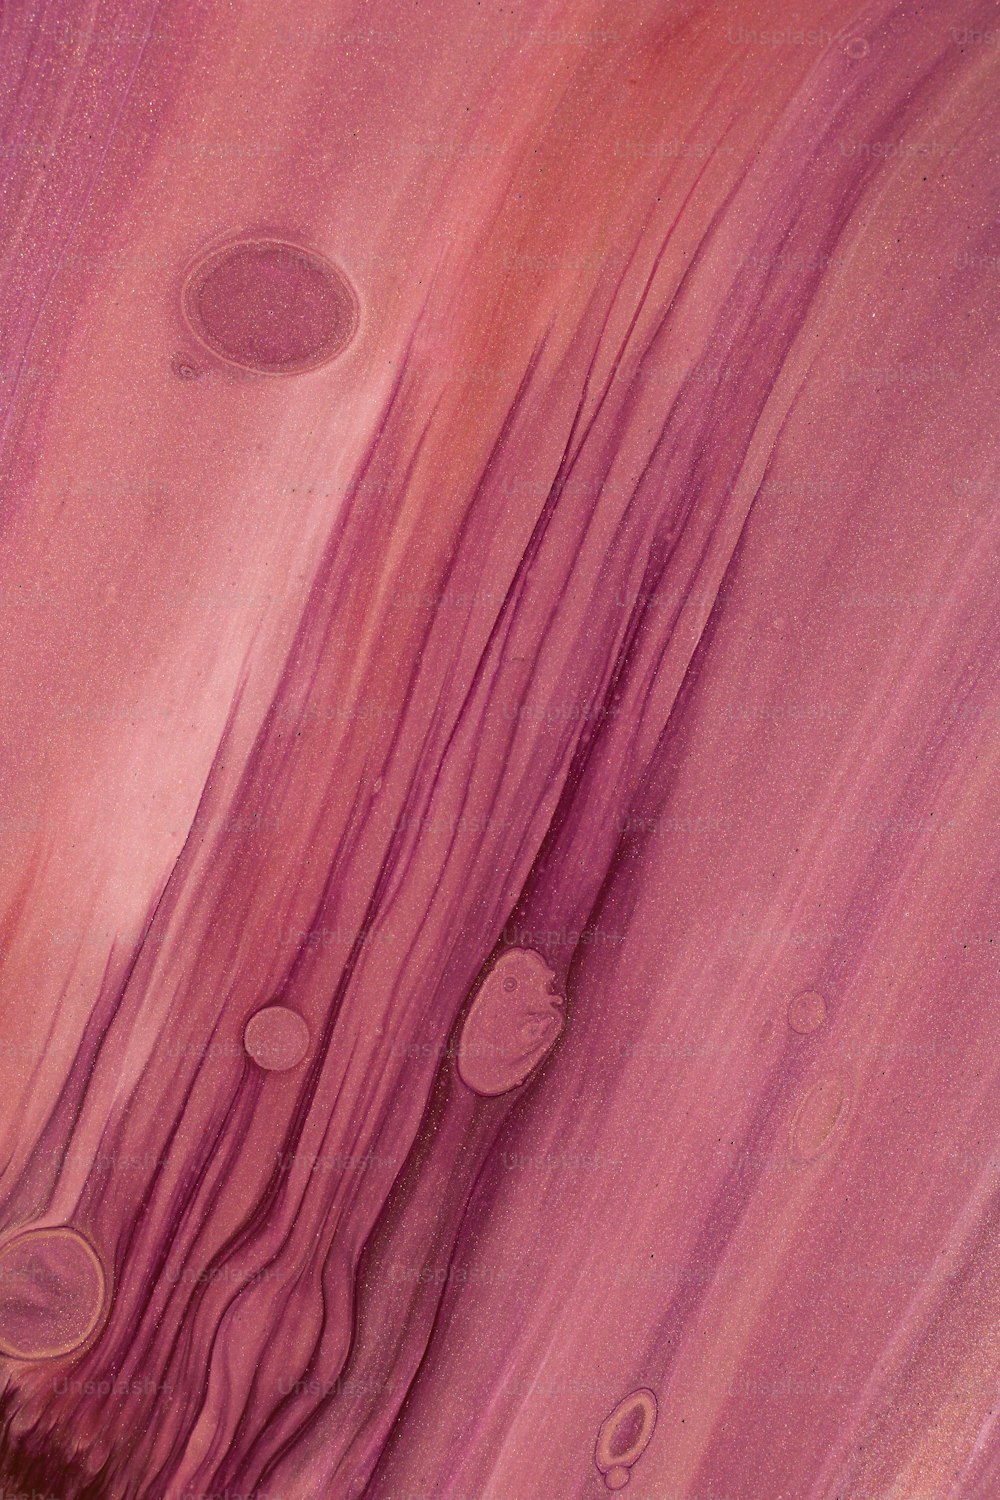 Fotos de Pink abstract background, Imagens de Pink abstract